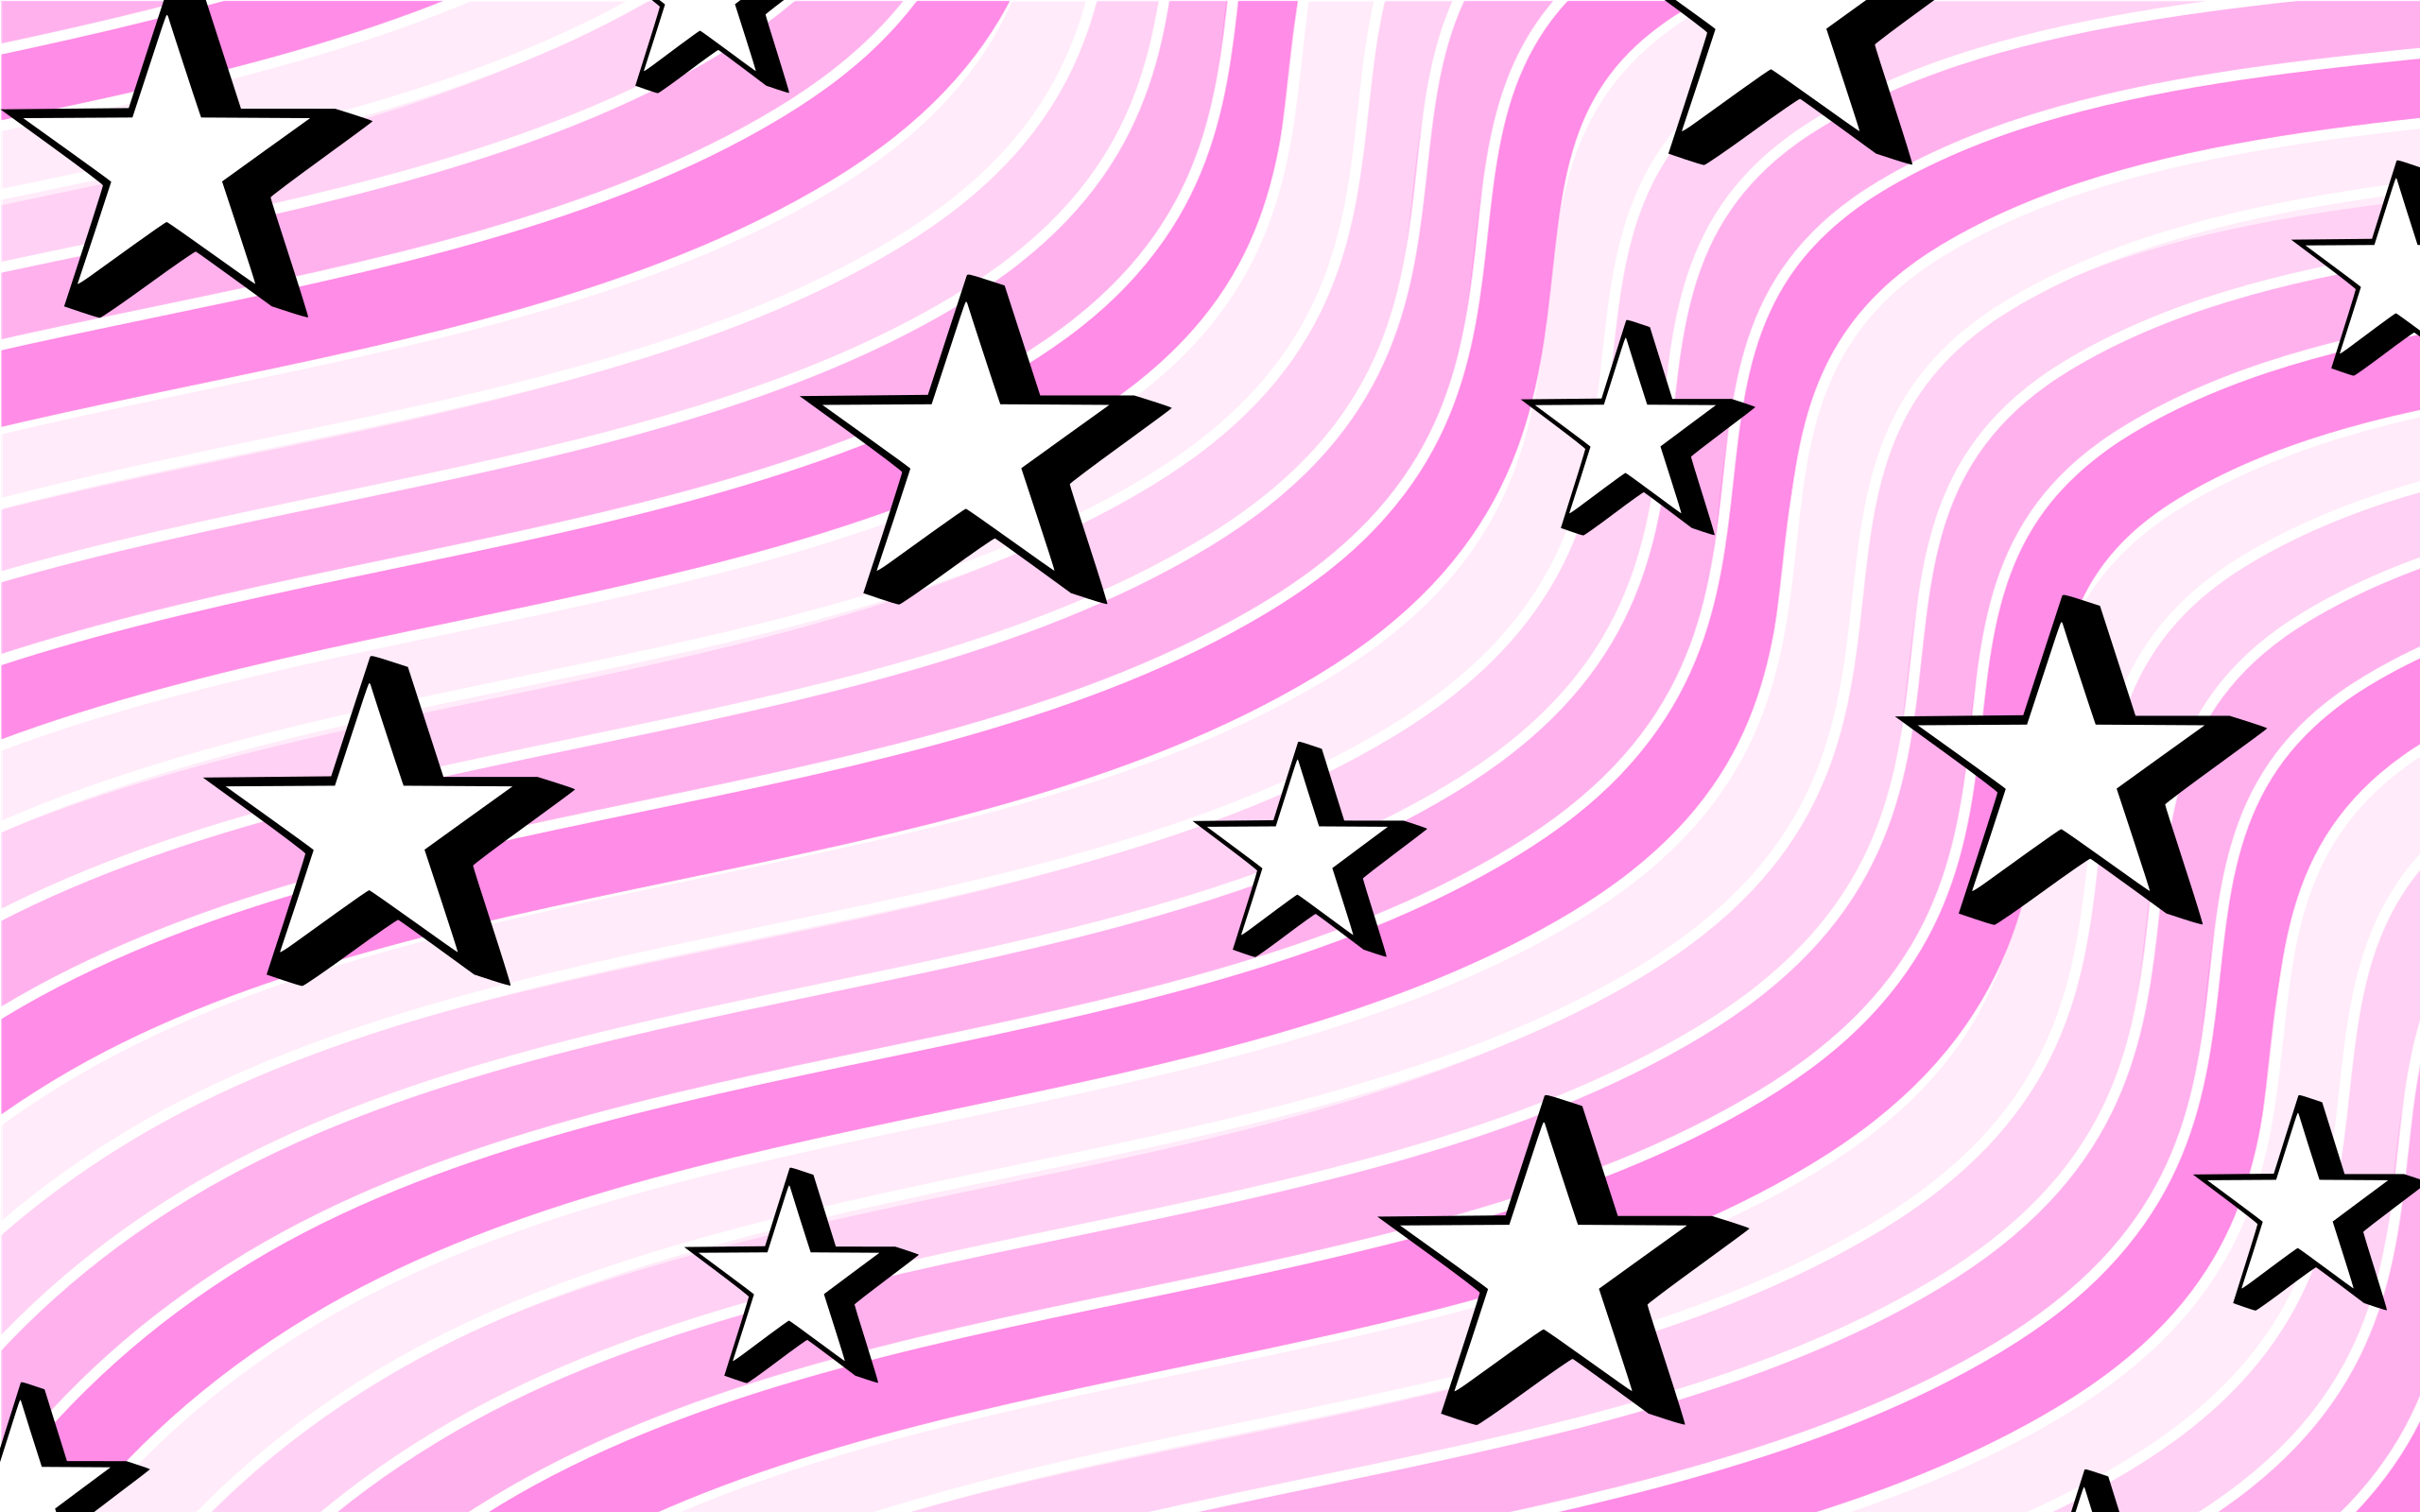 aesthetic pink star swirls background. iPhone wallpaper tumblr aesthetic, Aesthetic iphone wallpaper, Aesthetic wallpaper